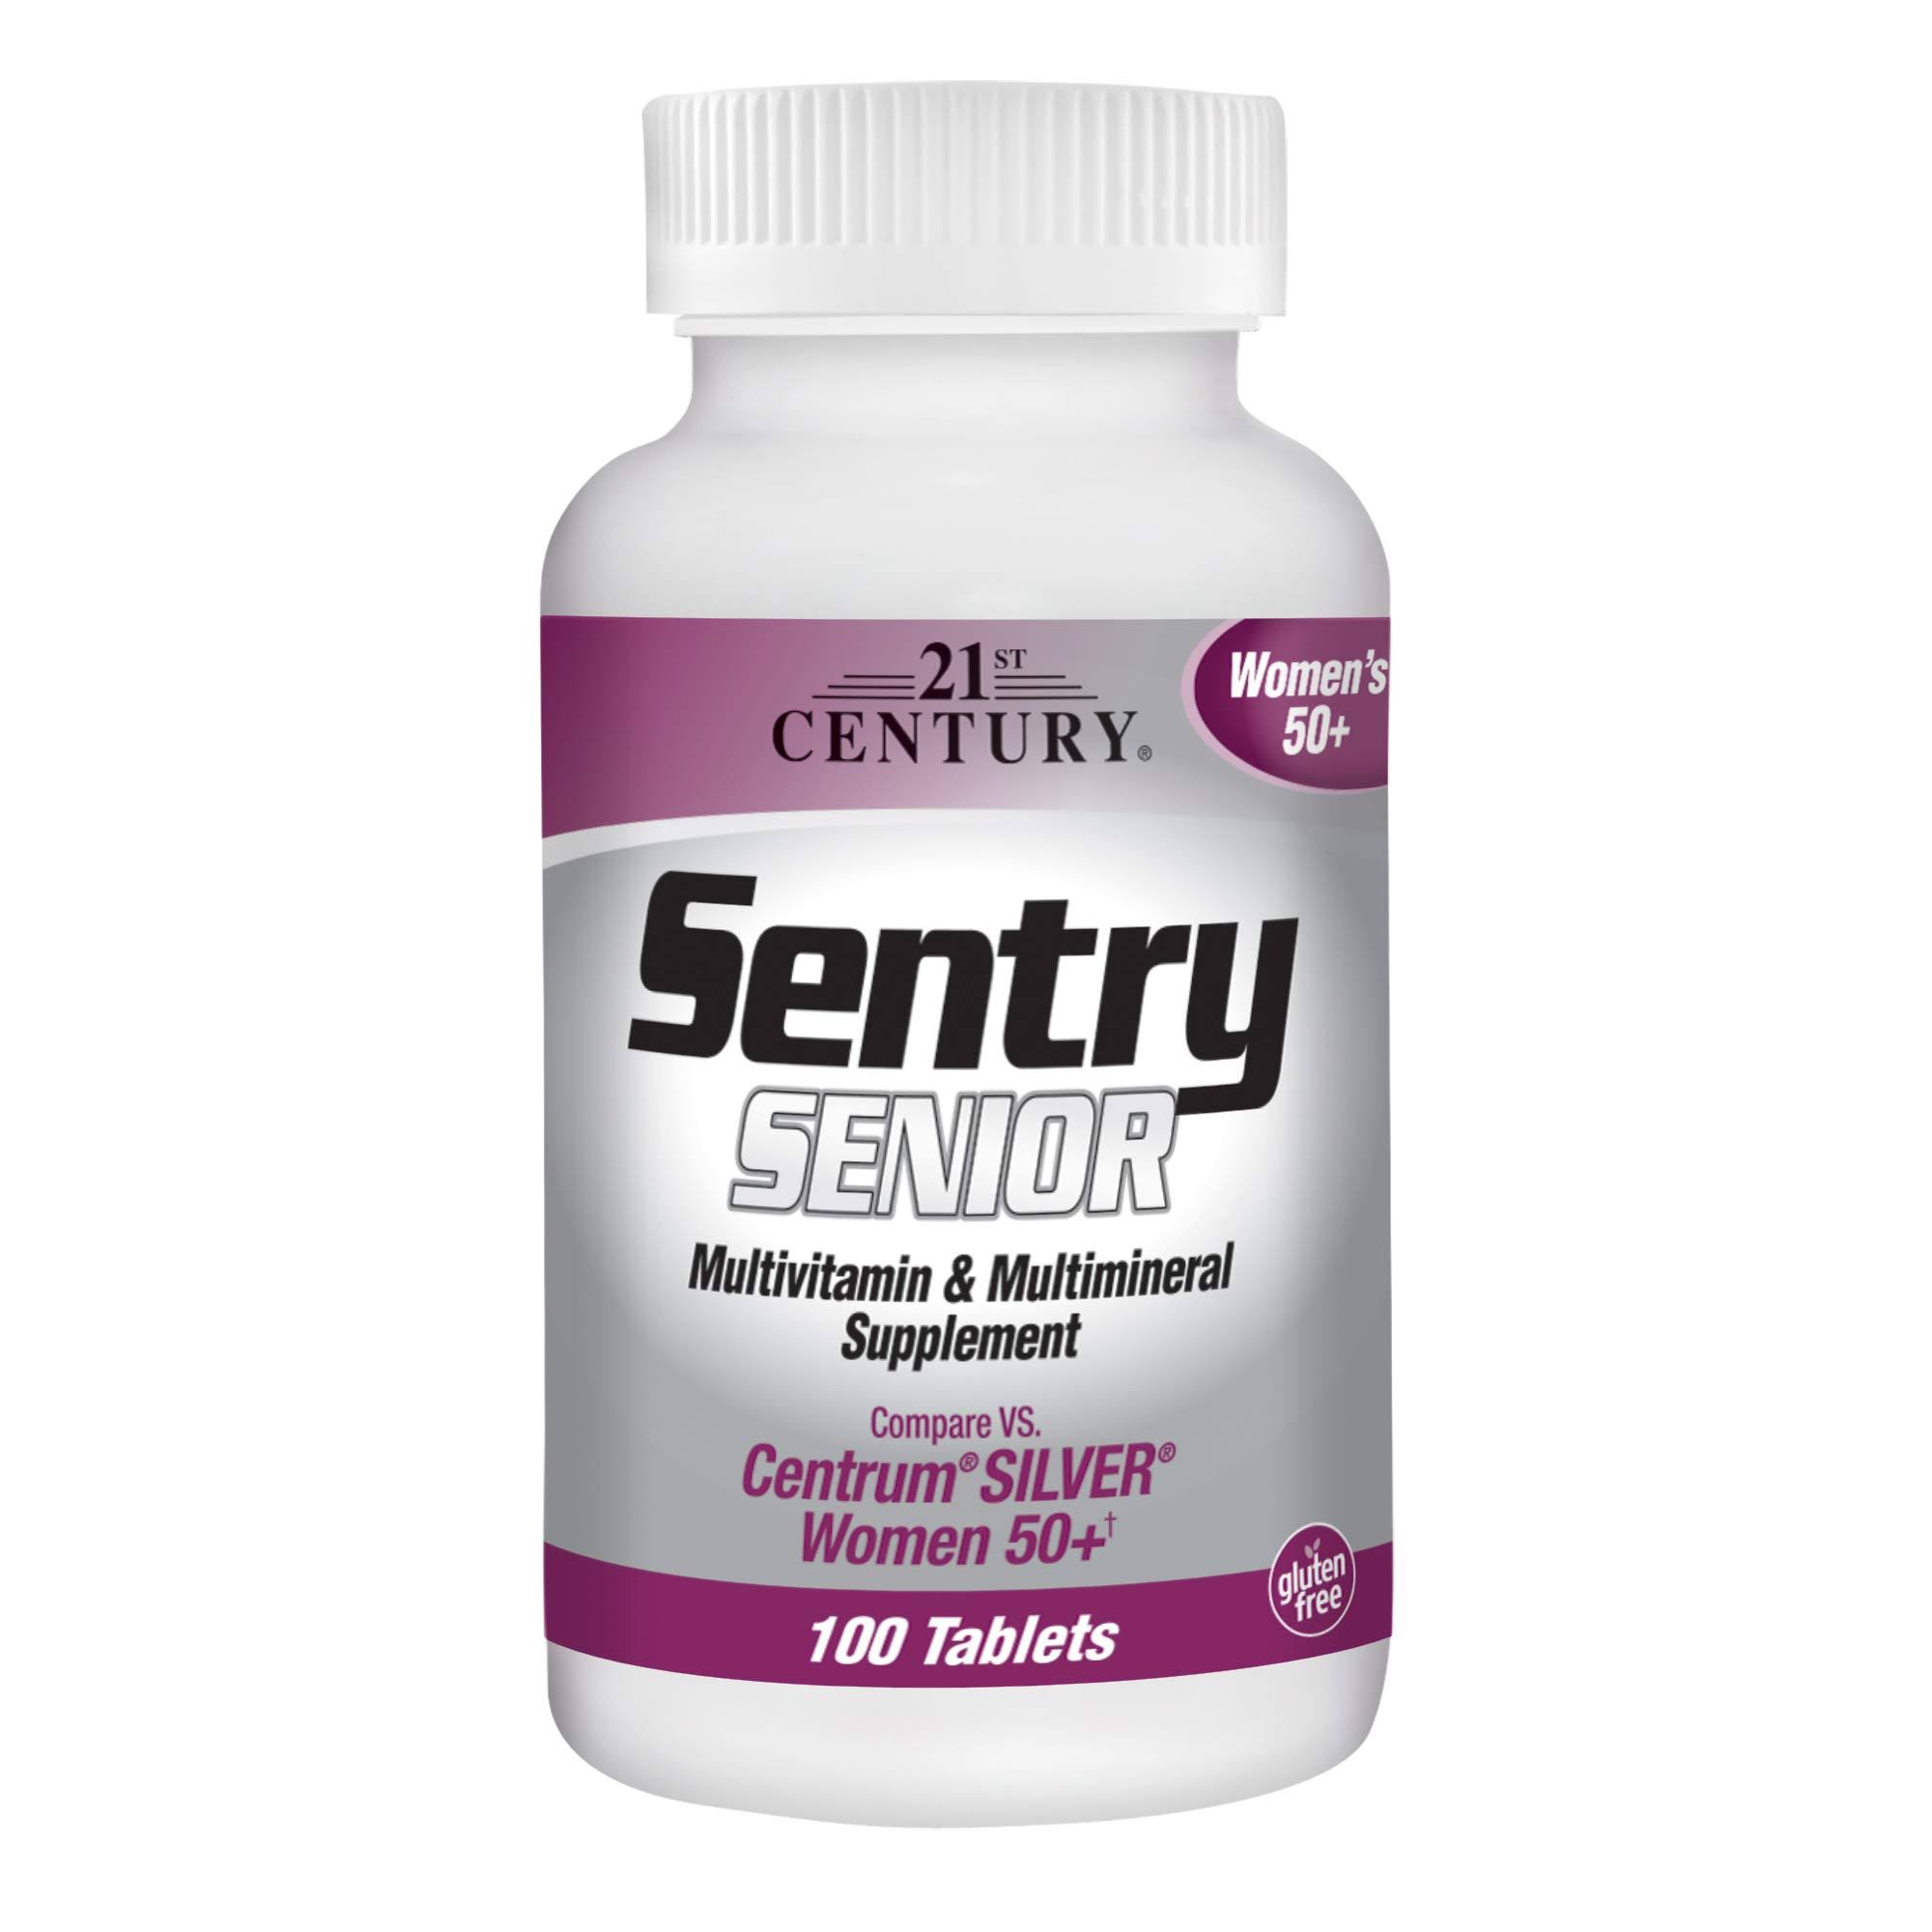 21st Century Sentry Senior Multivitamin & Multimineral Supplement - Women, 100ct